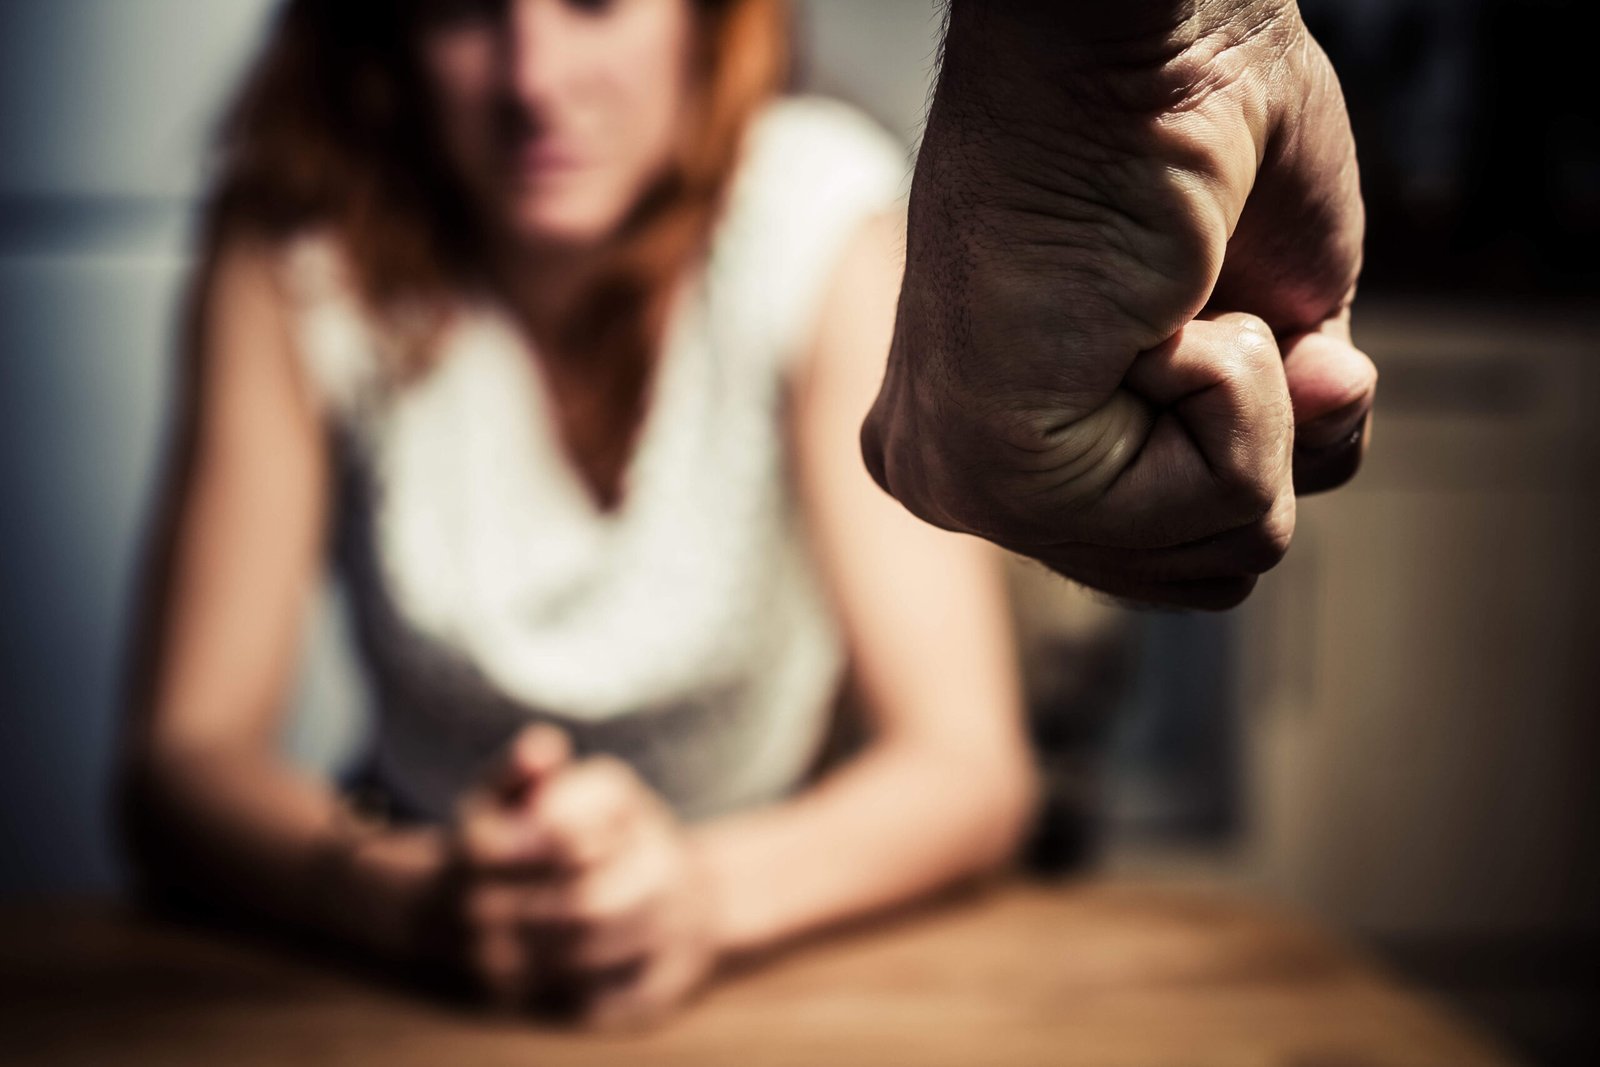 Domestic Violence facing a women